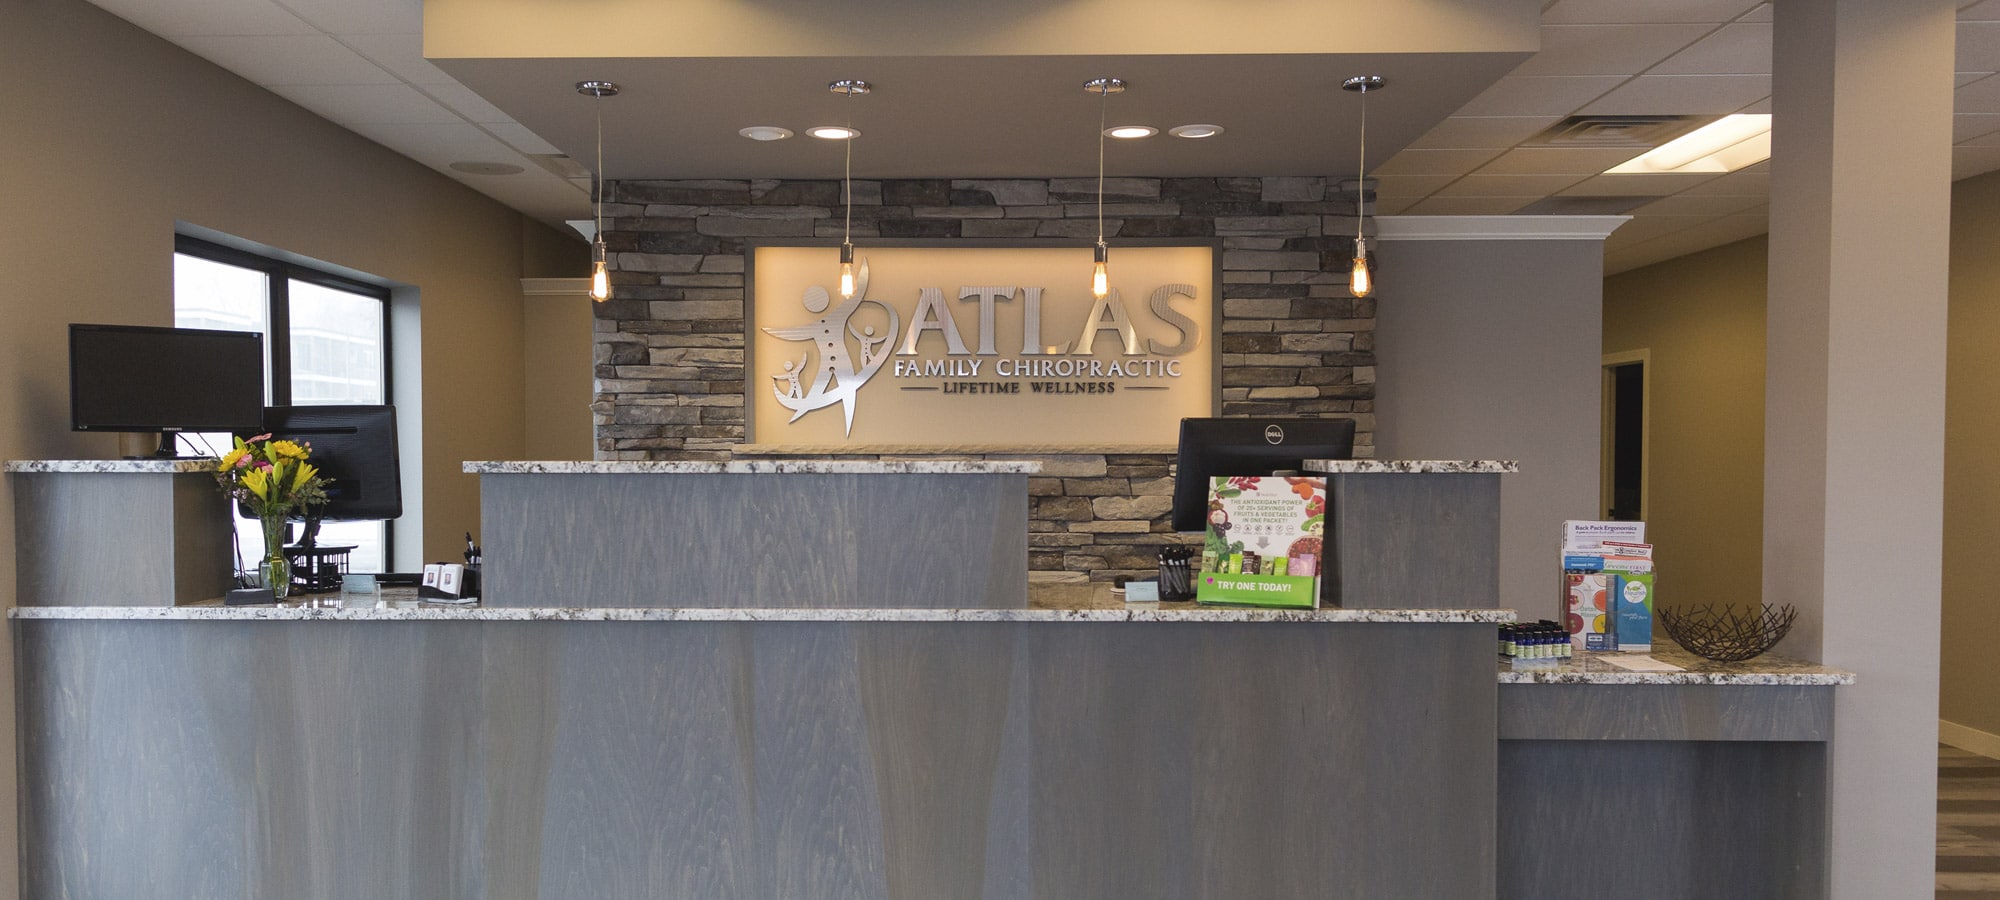 Atlas Family Chiropractic Receptionist Area